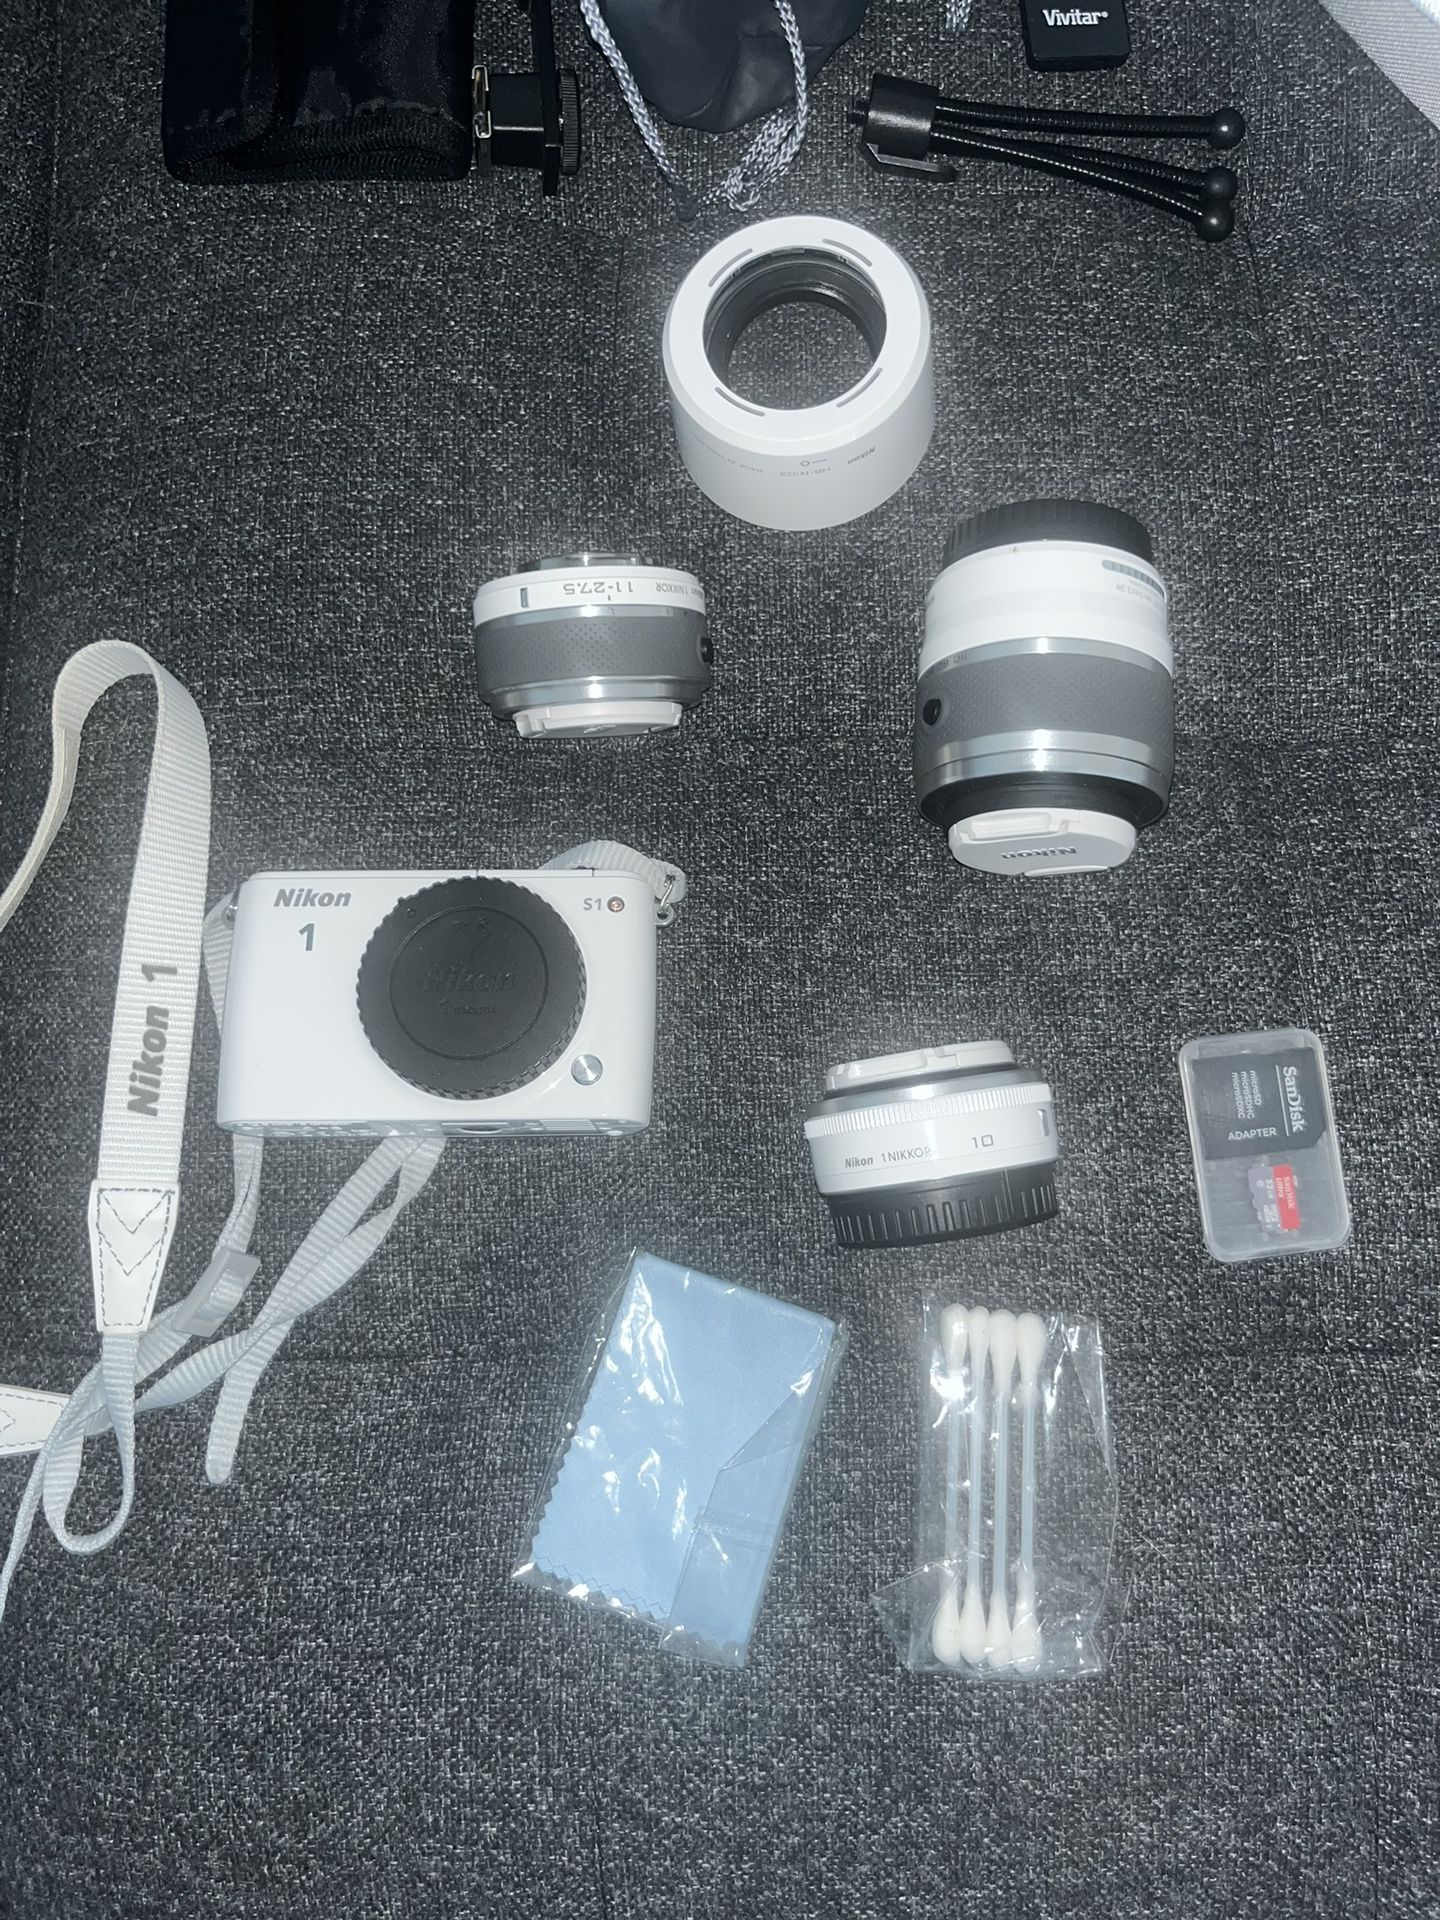 Nikon S1 Camera Set